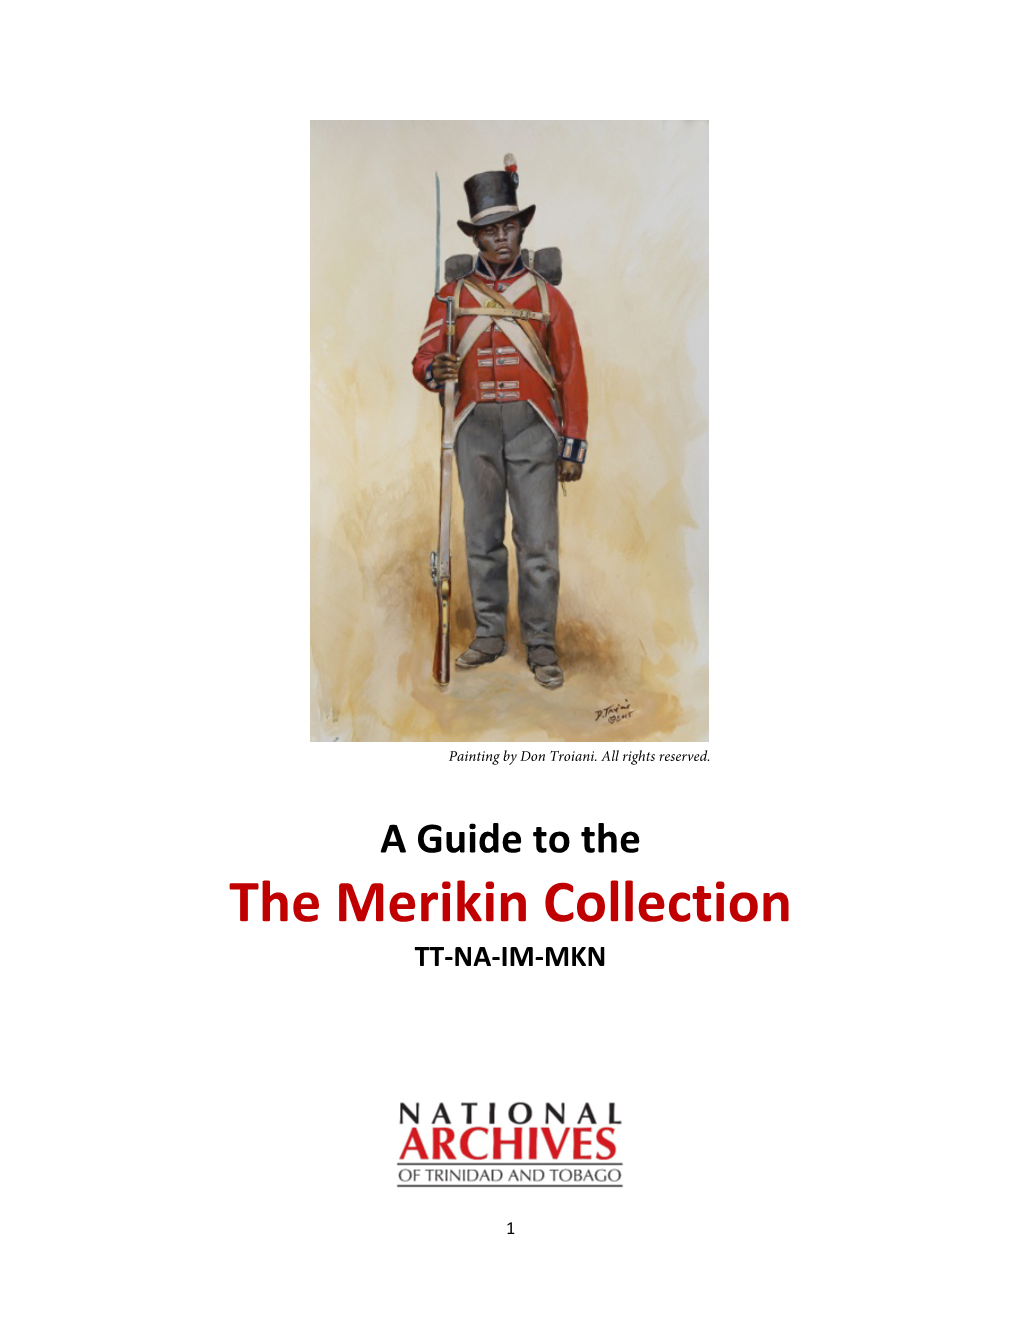 The Merikin Collection TT-NA-IM-MKN